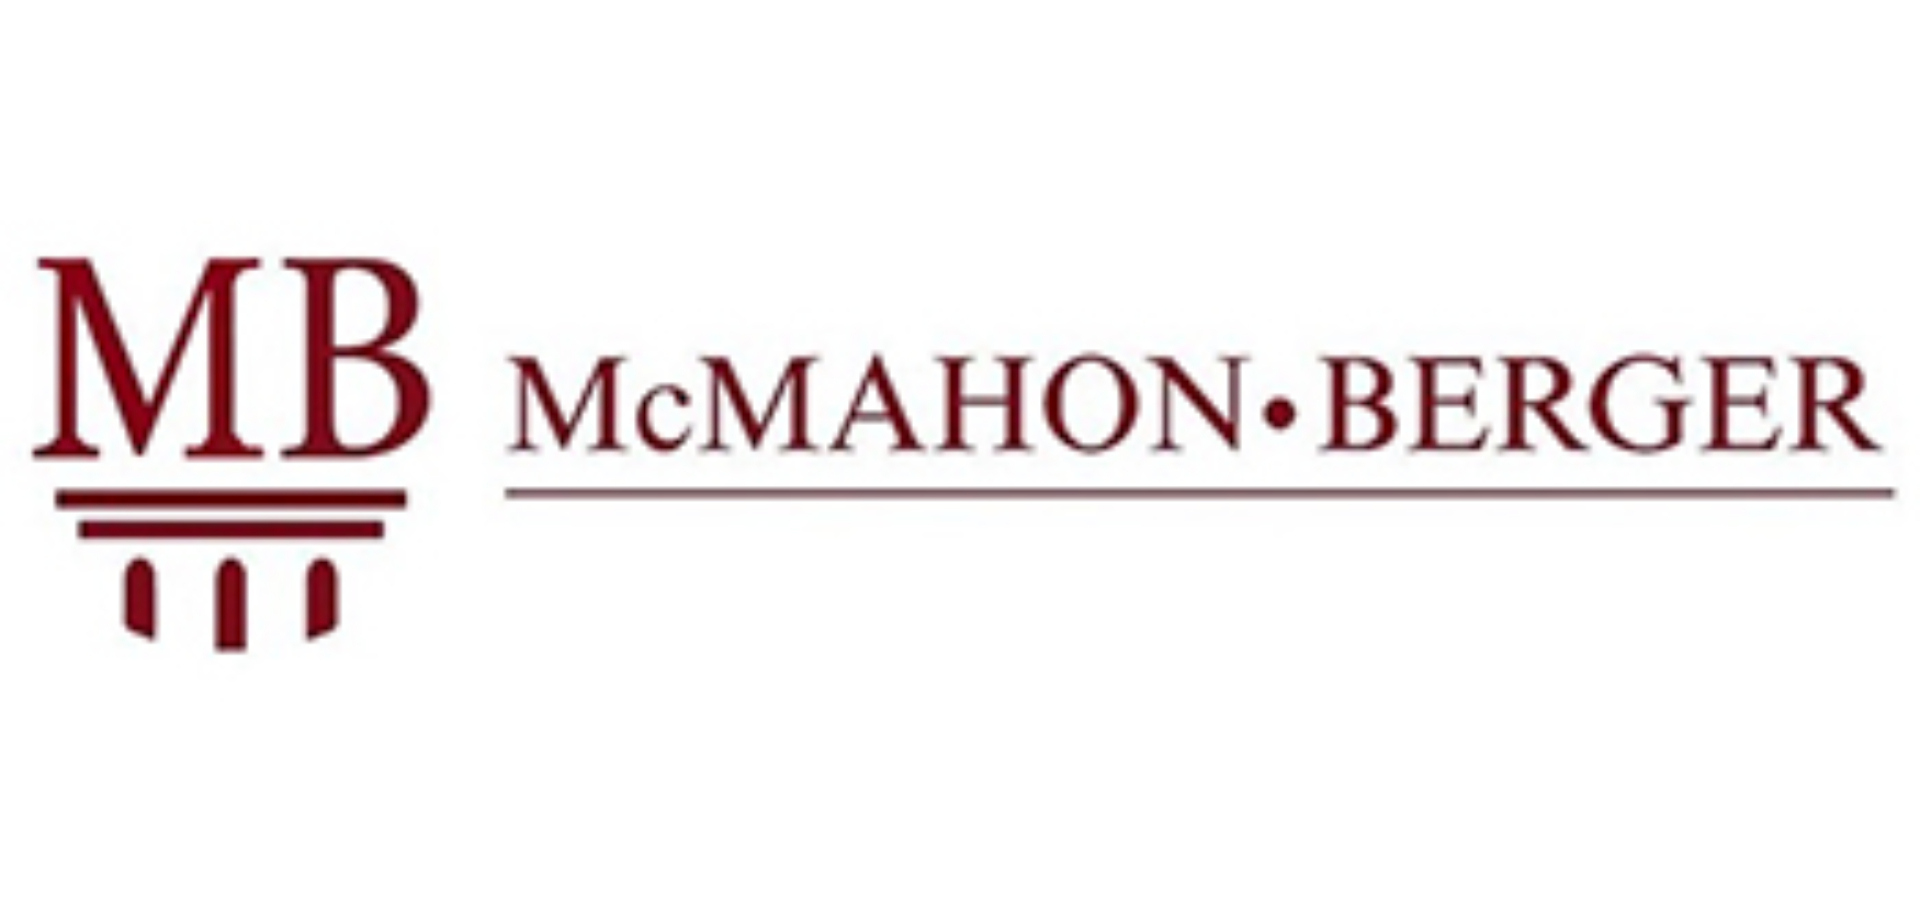 MB Logo McMahon Berger – Resized